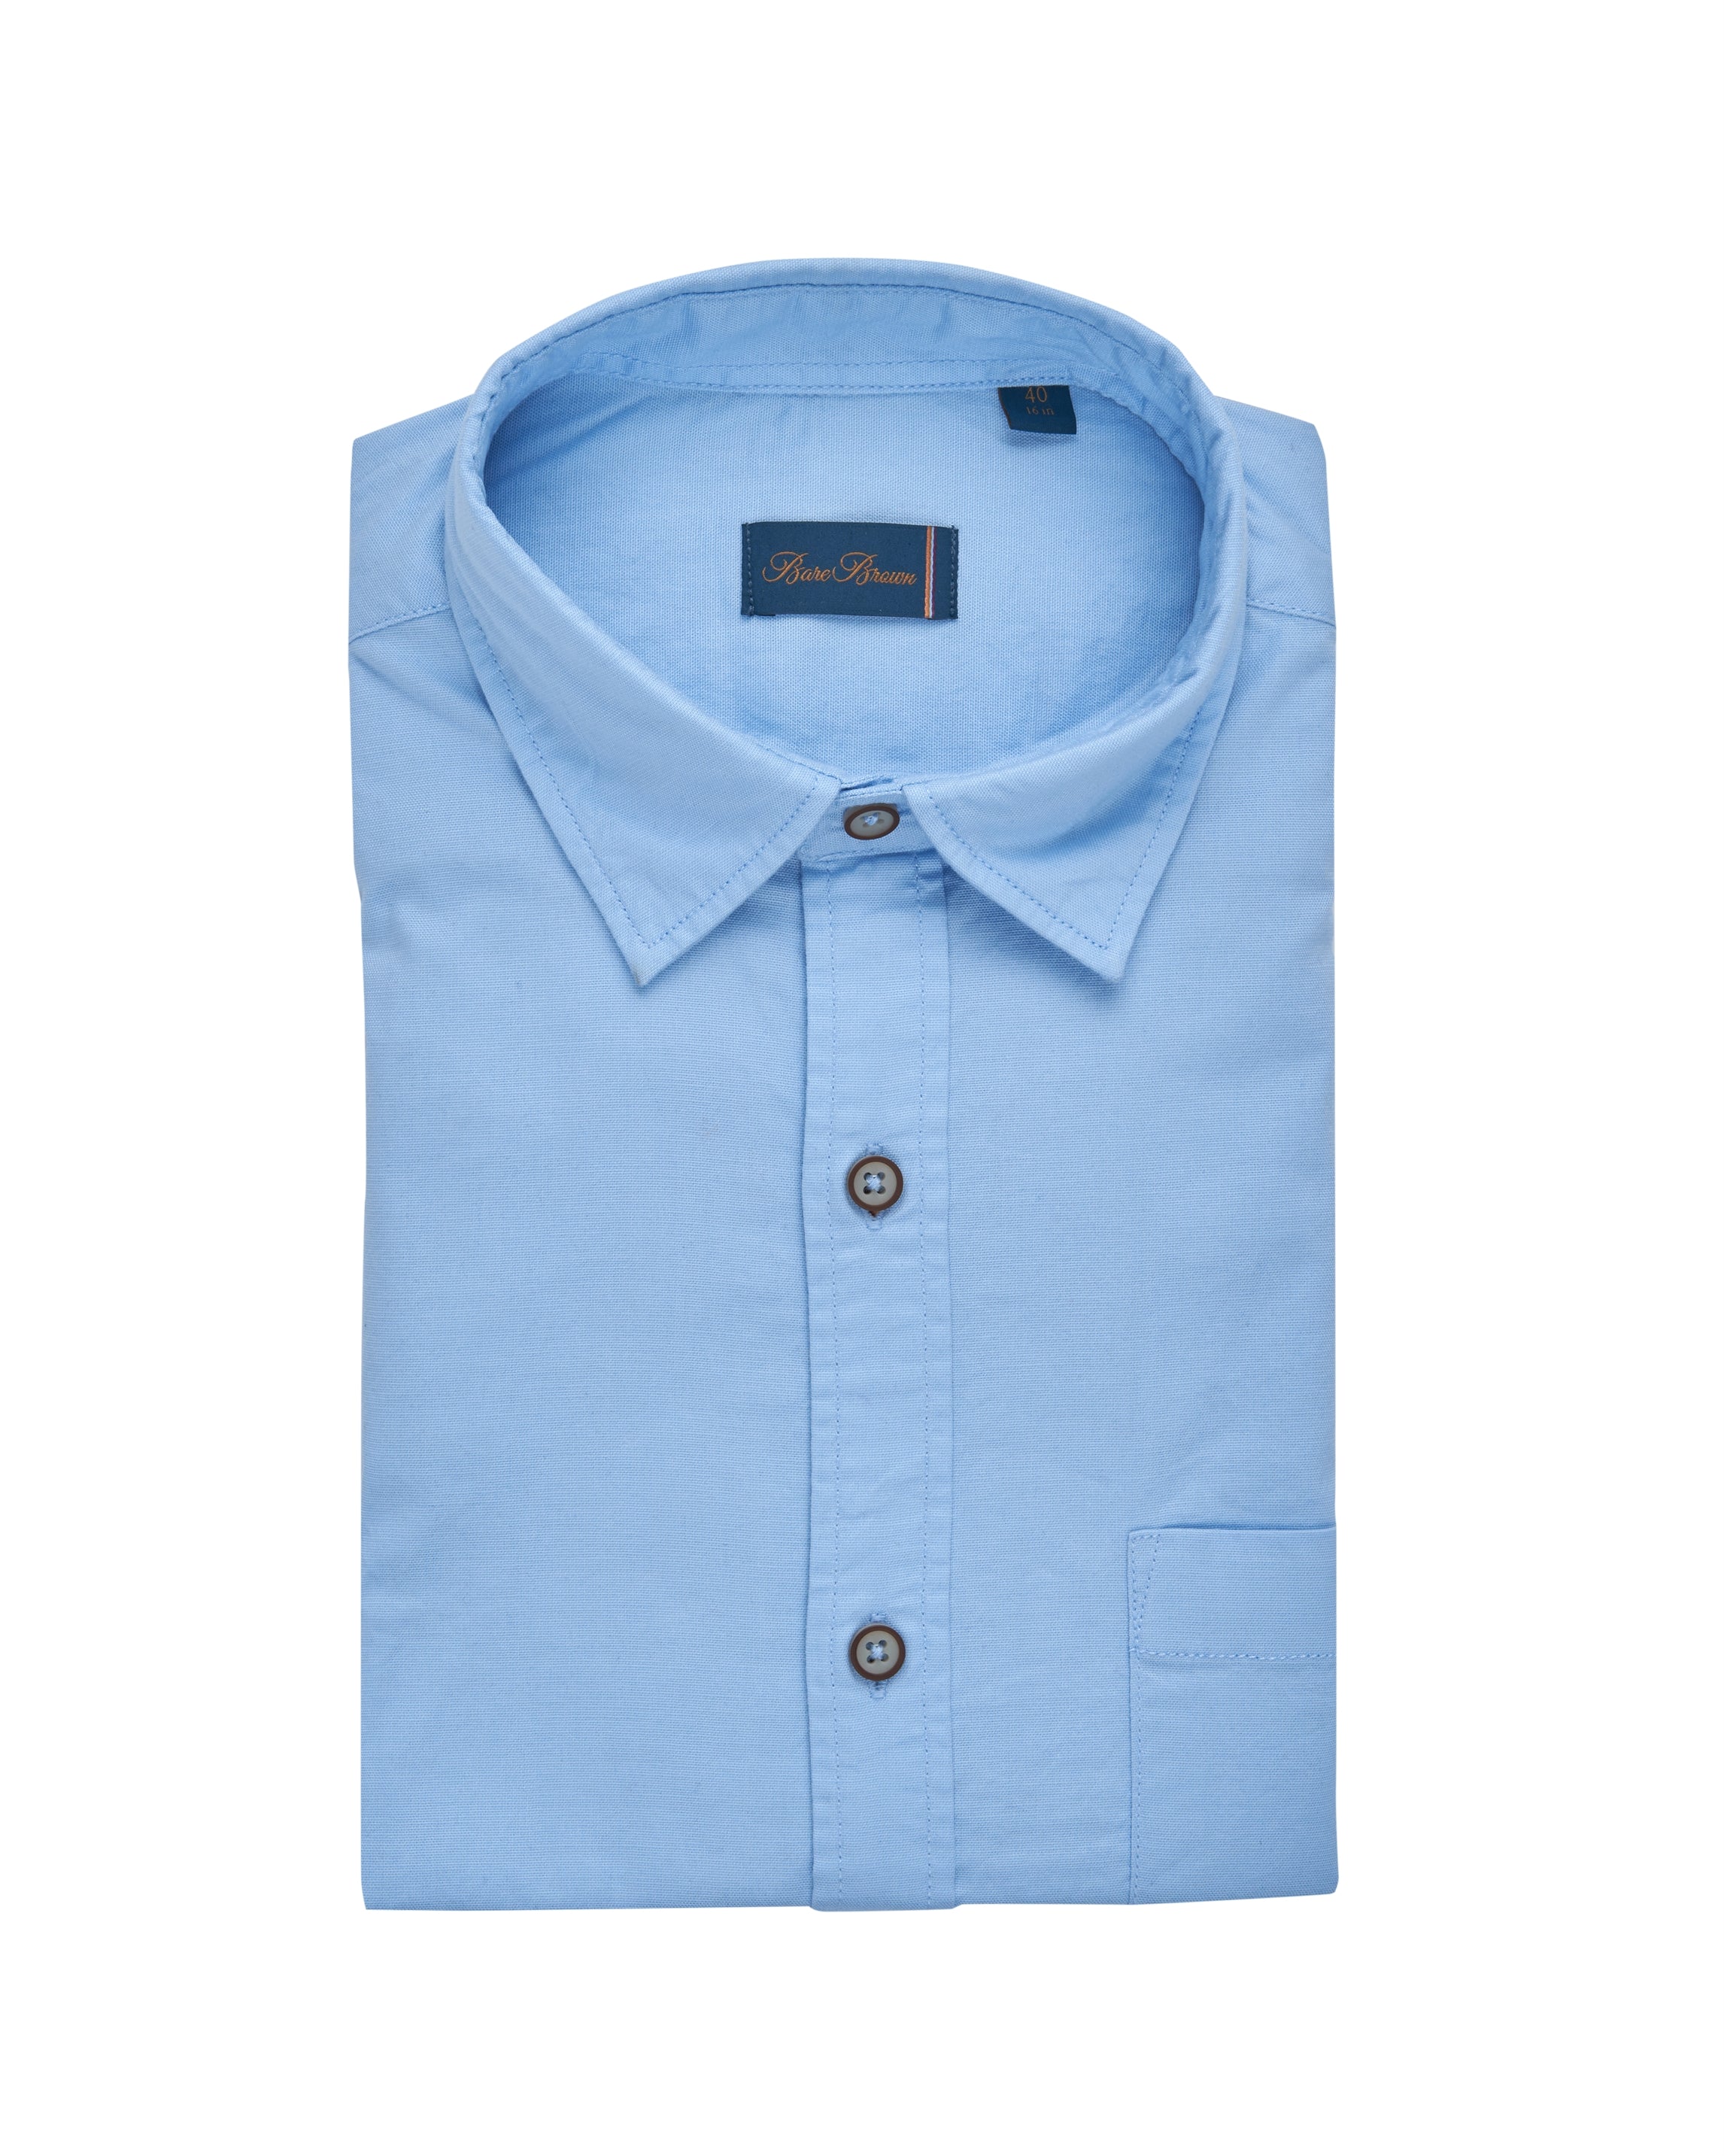 Bare Brown - Light Blue Stretch Cotton Shirt, Slim Fit